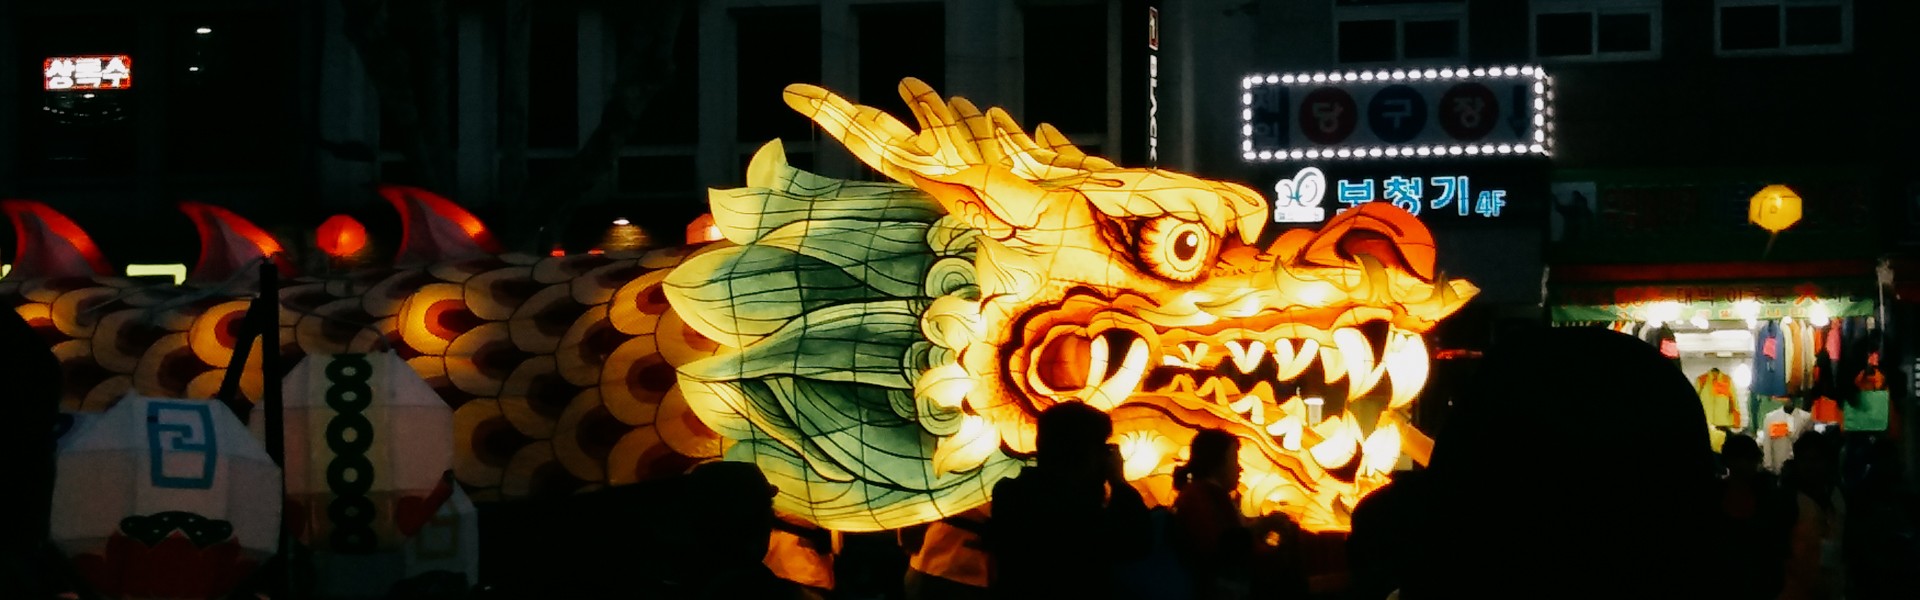 lotus lantern festival seoul